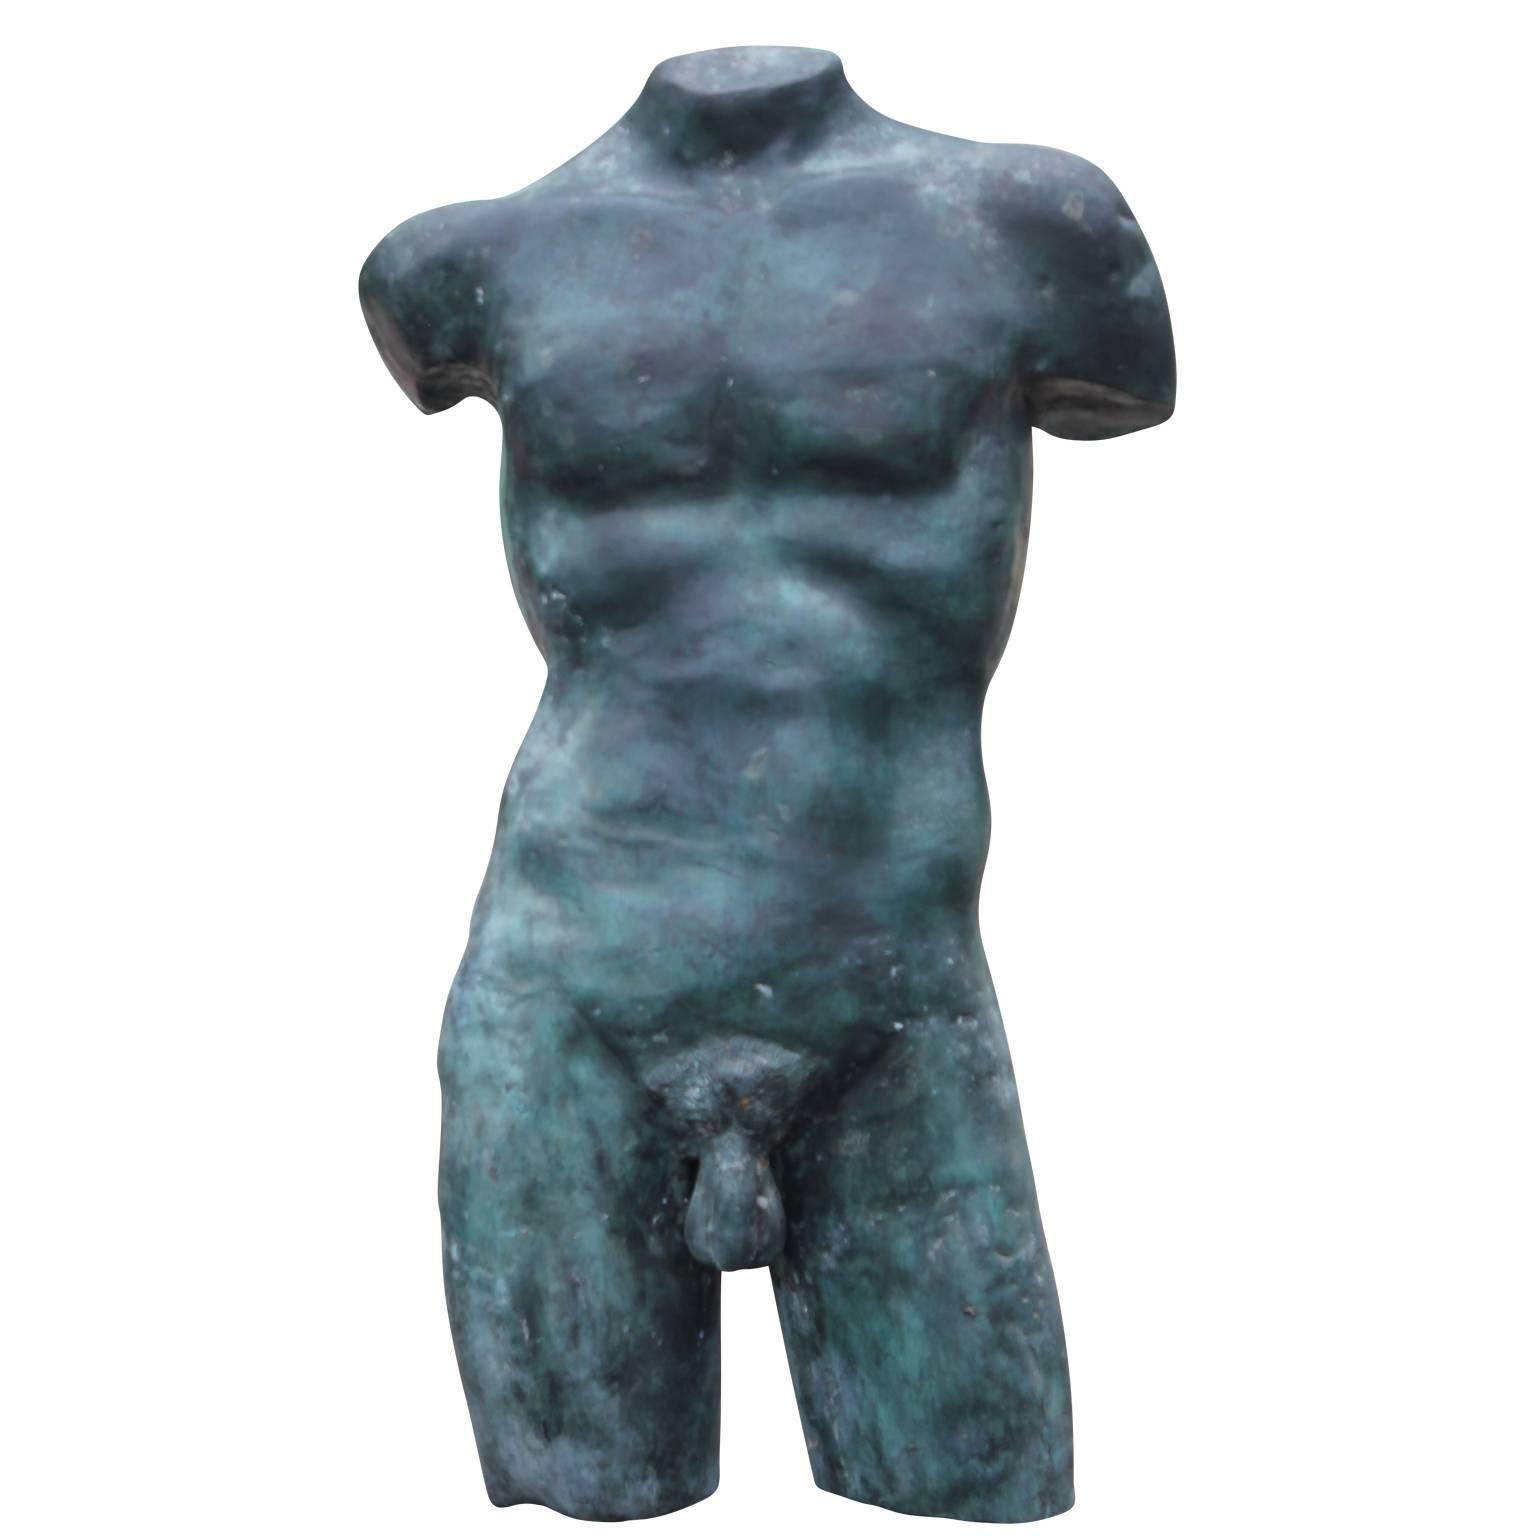 Unknown Nude Sculpture - Classical Bronze Male Torso Sculpture